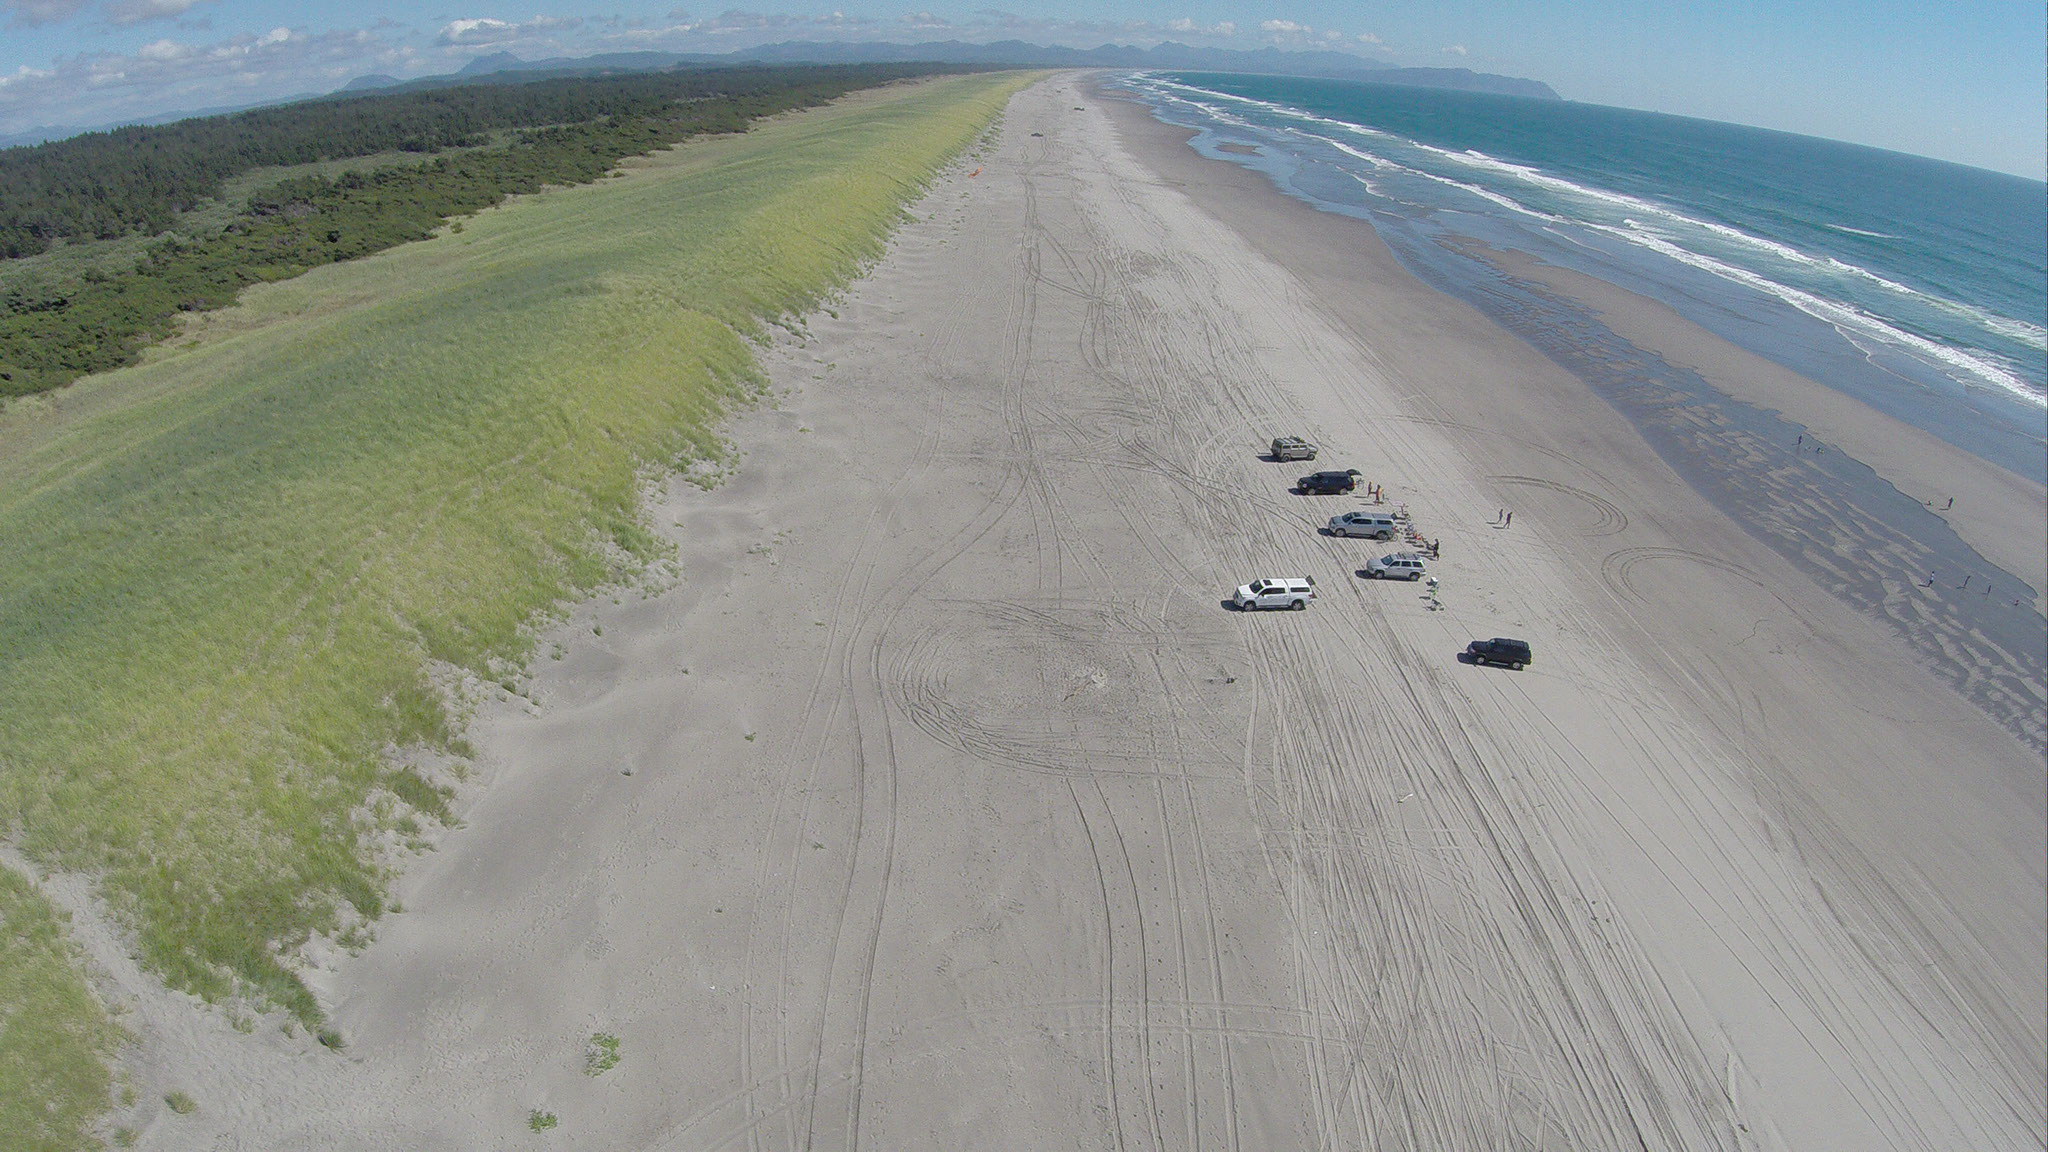 oregon dunes sand 4x4 rescue
sand offroading sand dunes